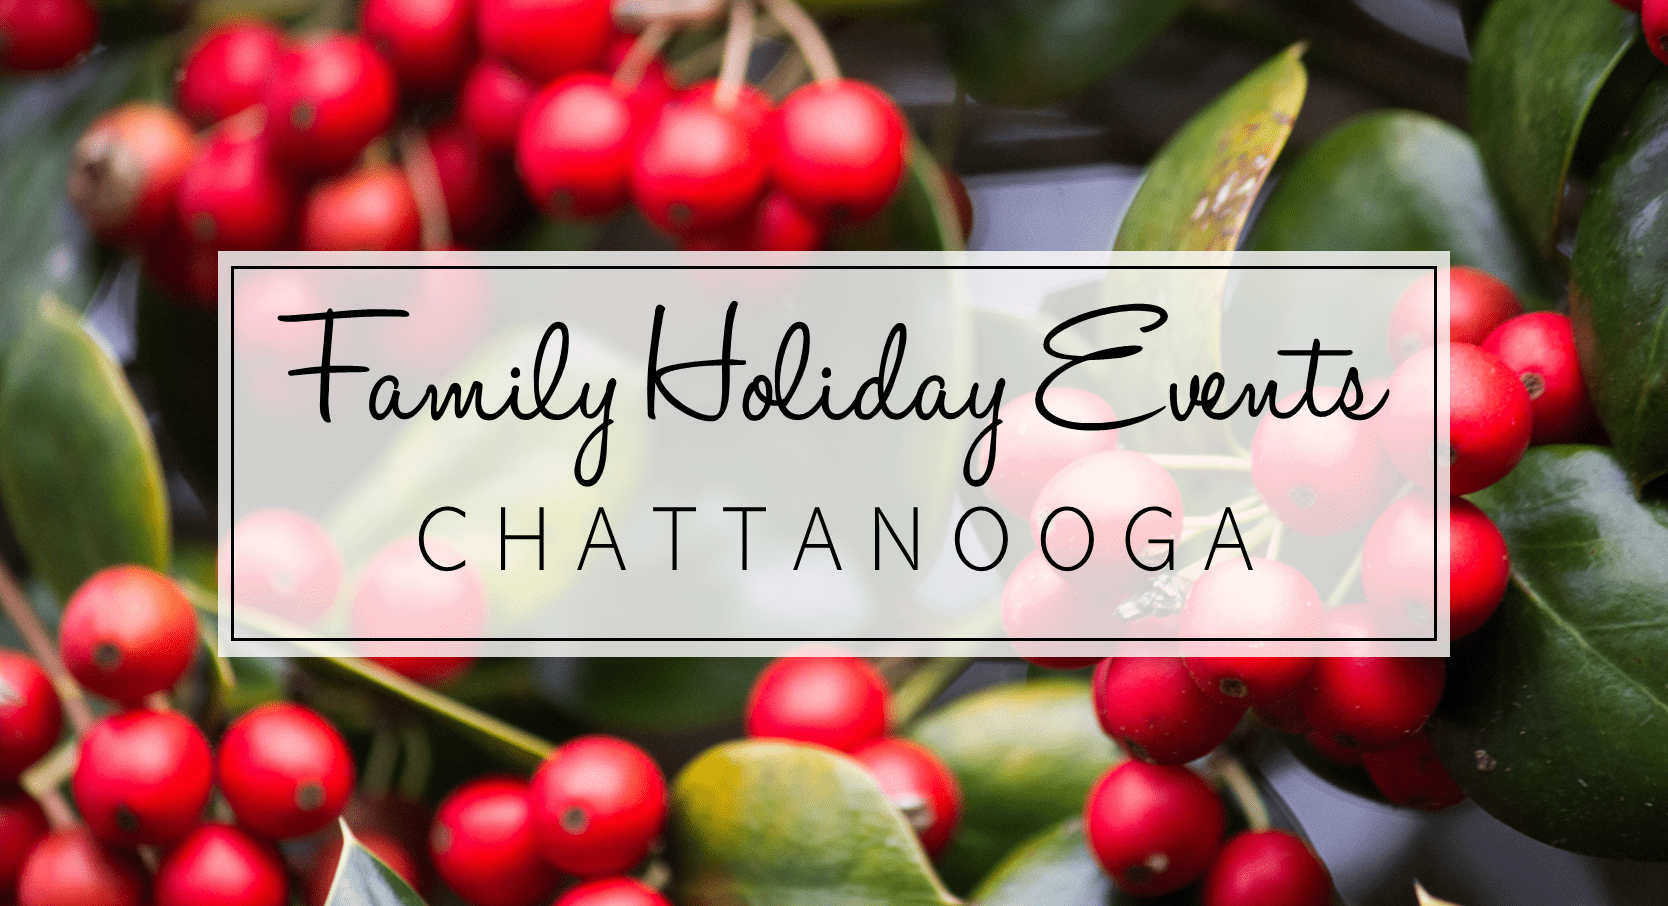 Chattanooga Holiday and Christmas Events